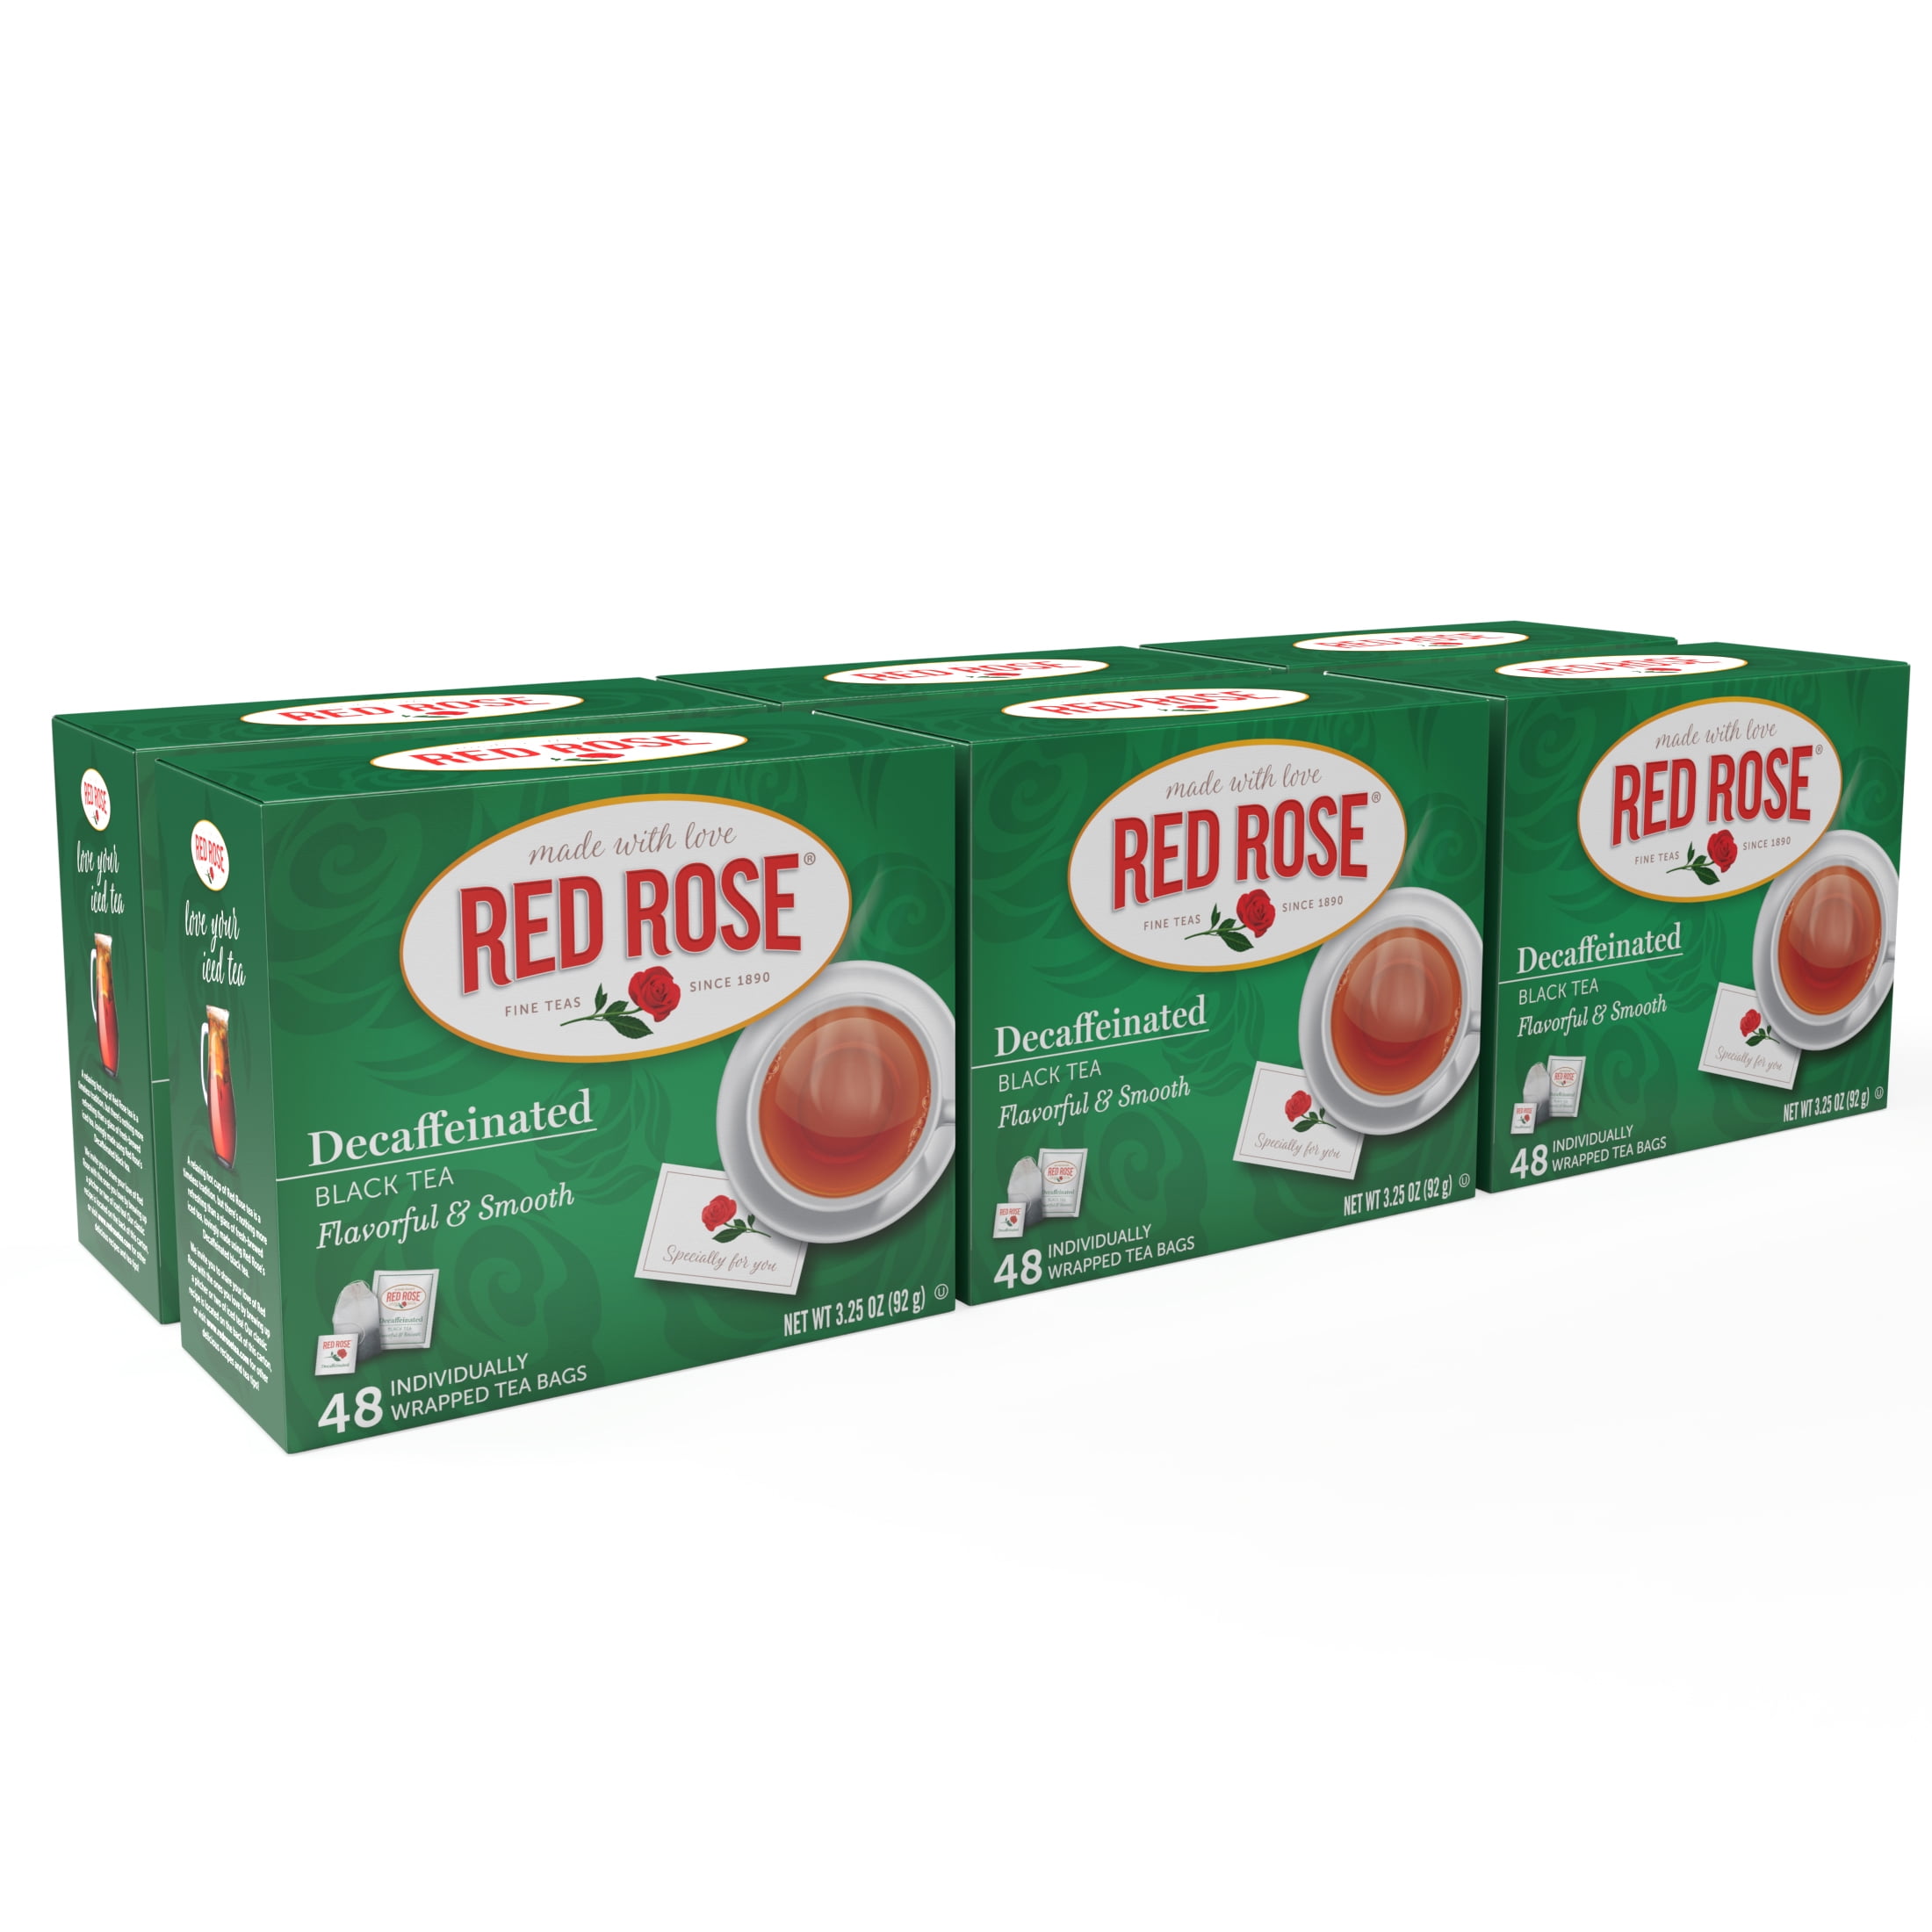 Red Rose Tea Decaffeinated Orange Pekoe 48 Count